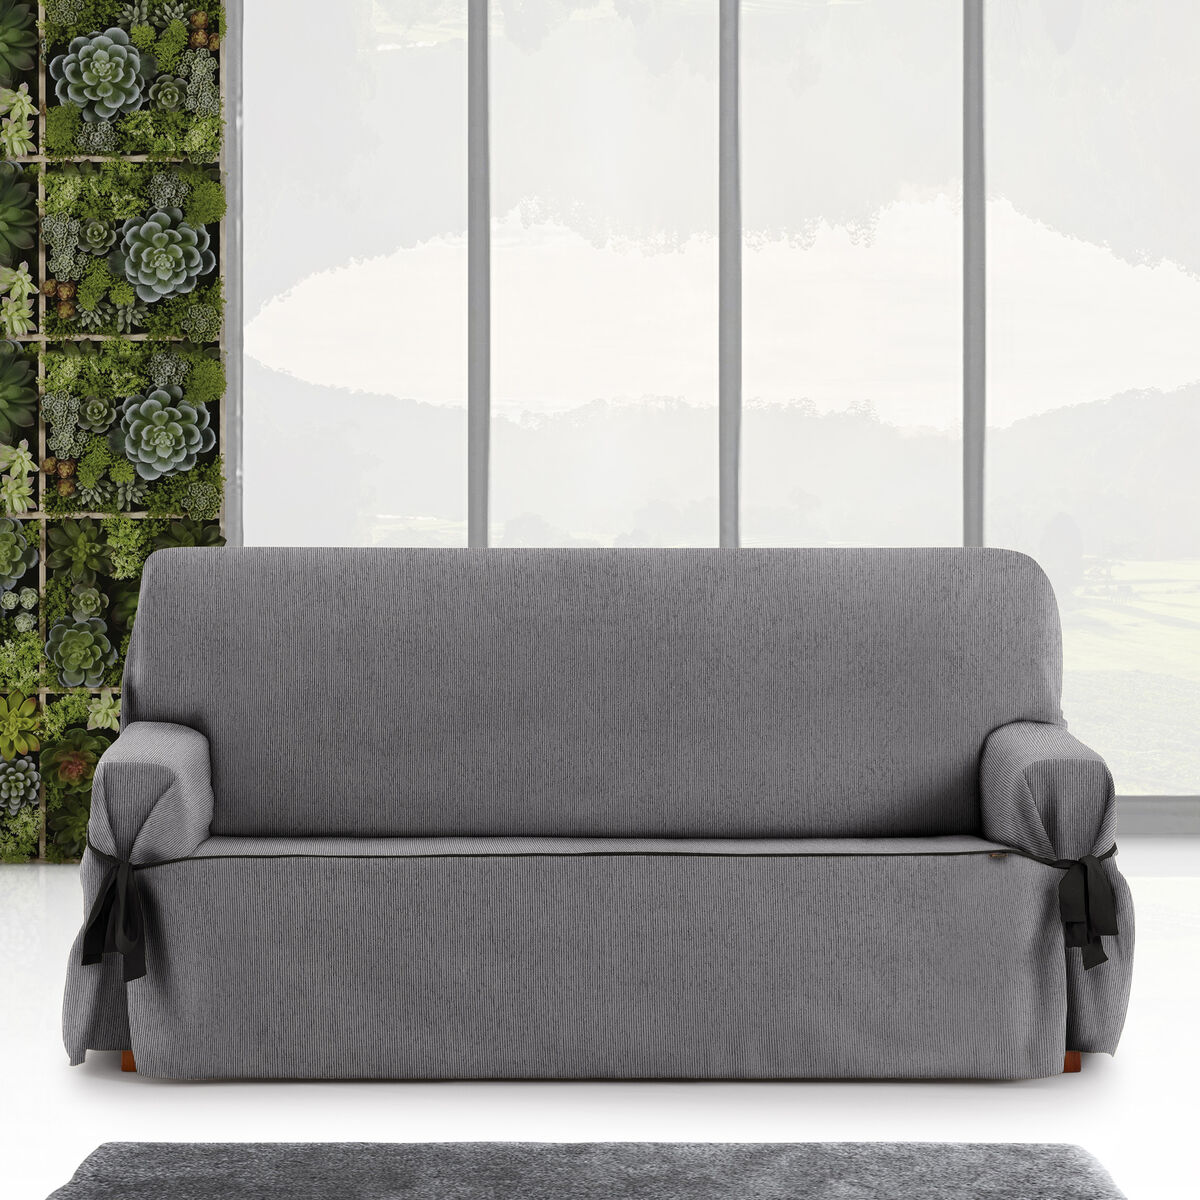 Sofa Cover Eysa MID Grey 100 x 110 x 180 cm